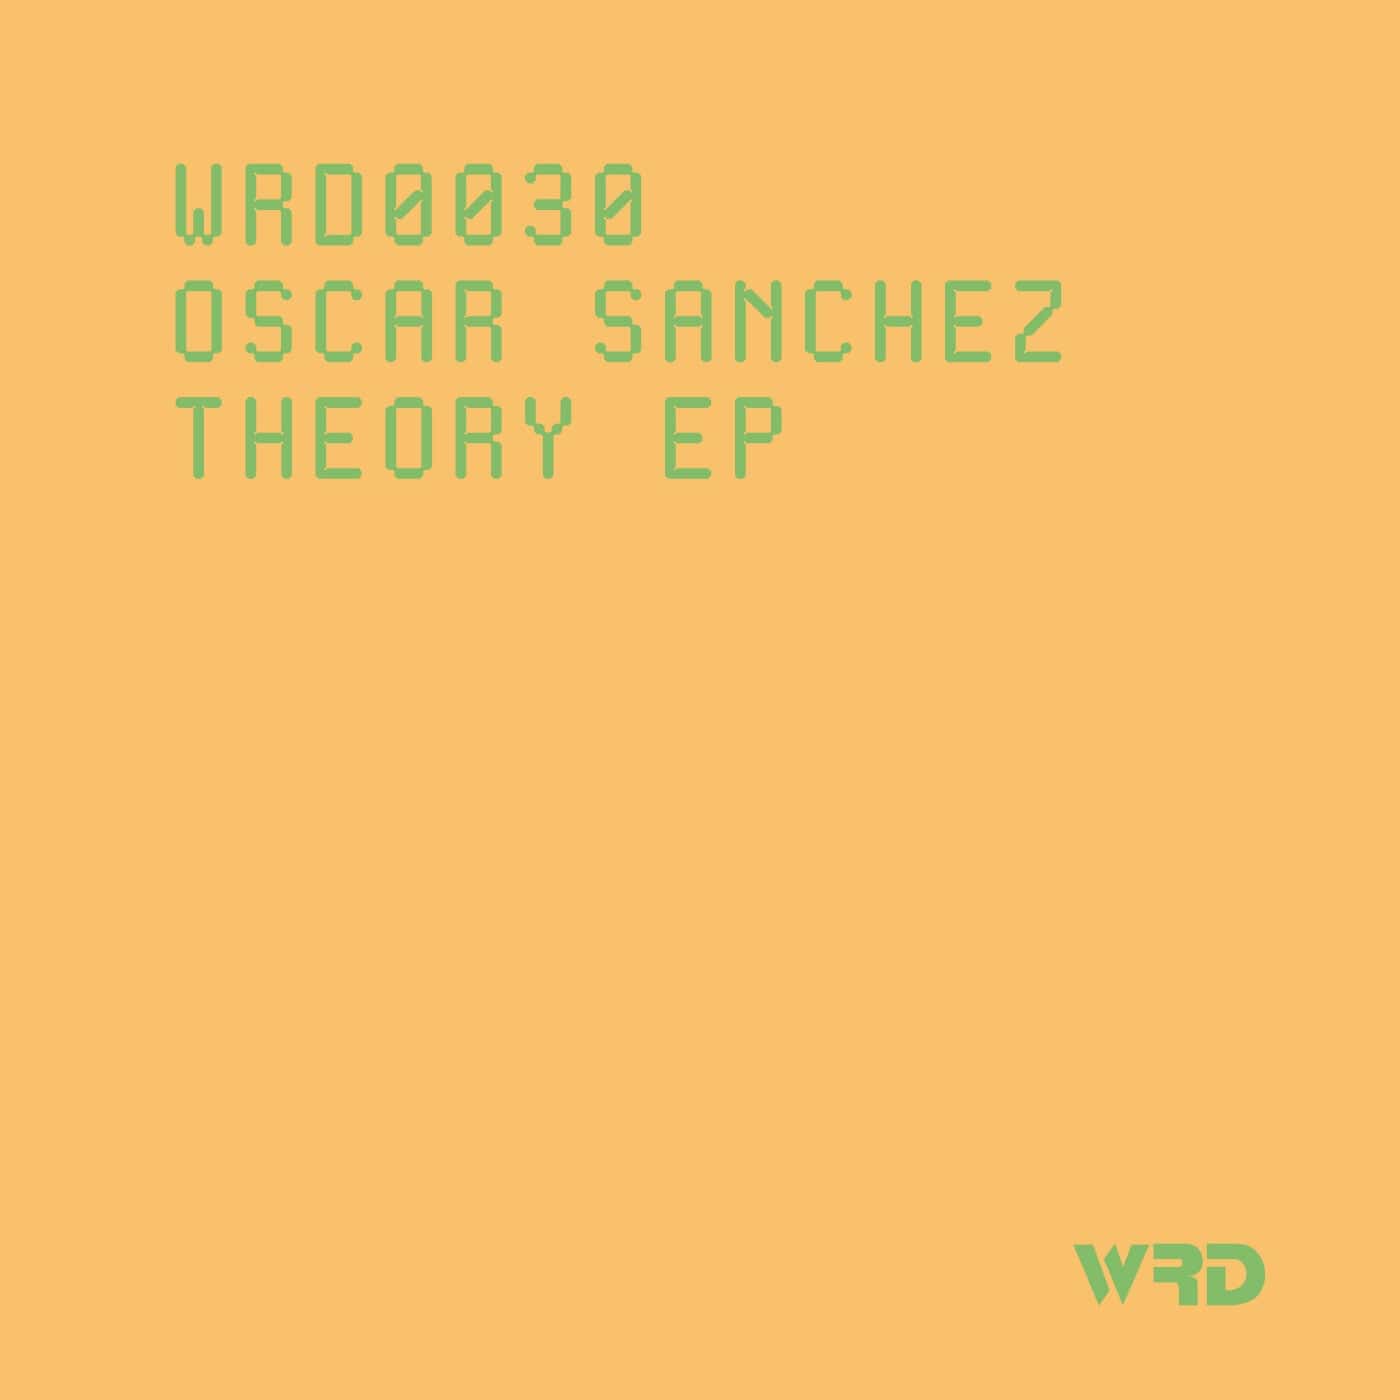 Download Oscar Sanchez - Theory EP on Electrobuzz